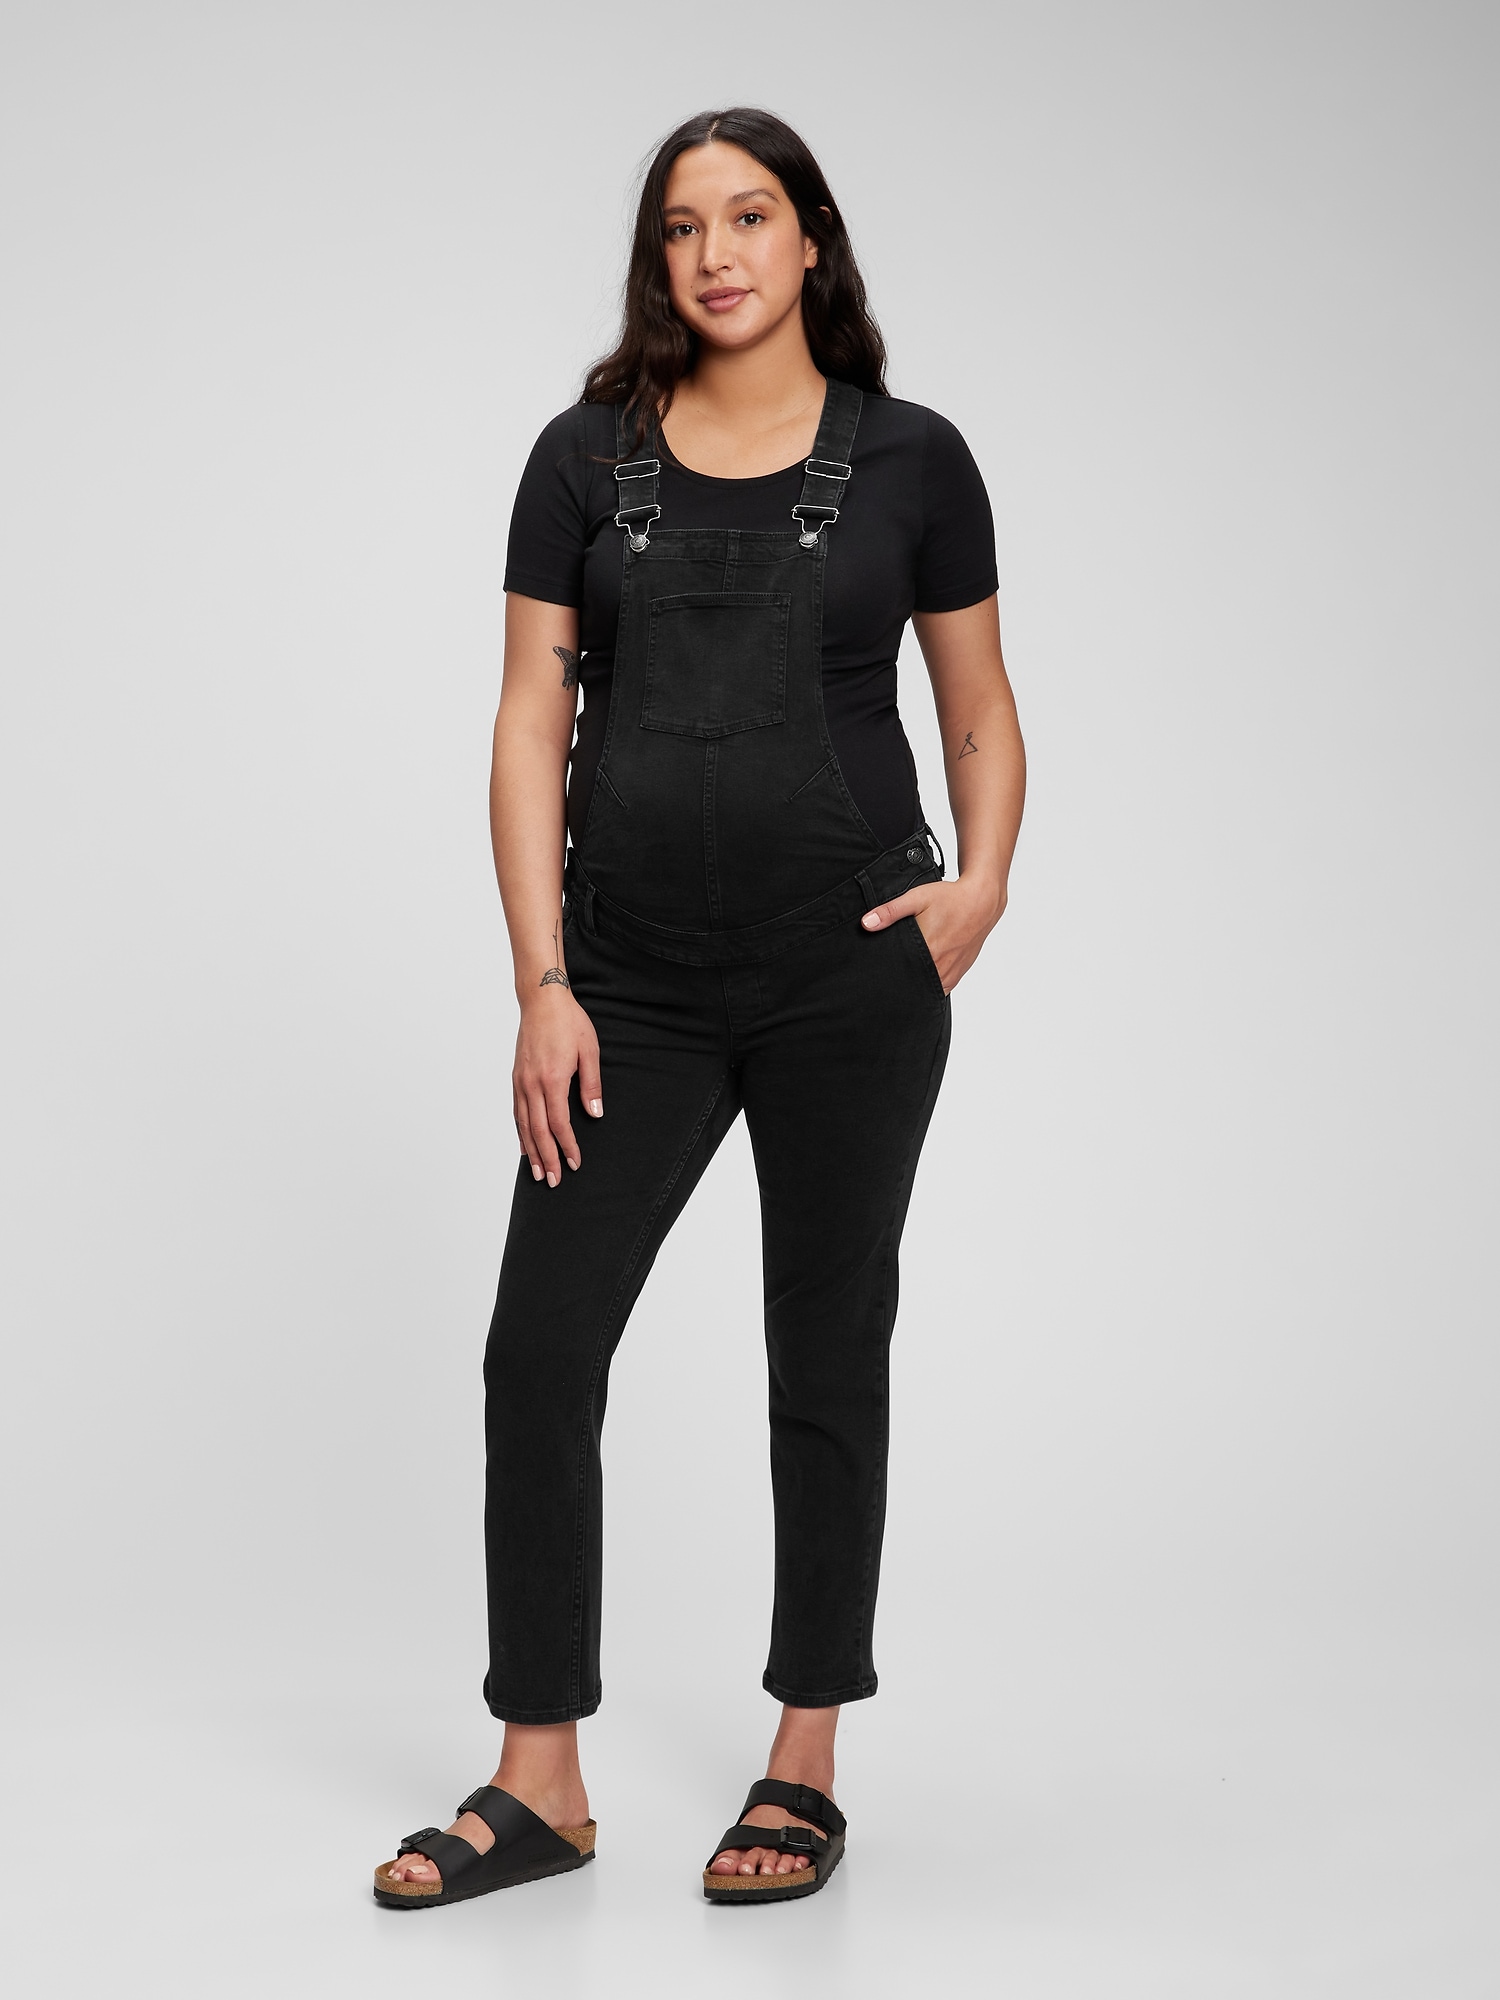 Gap - Maternity Solid Blue Black Jeans 28 Waist (Maternity) - 62